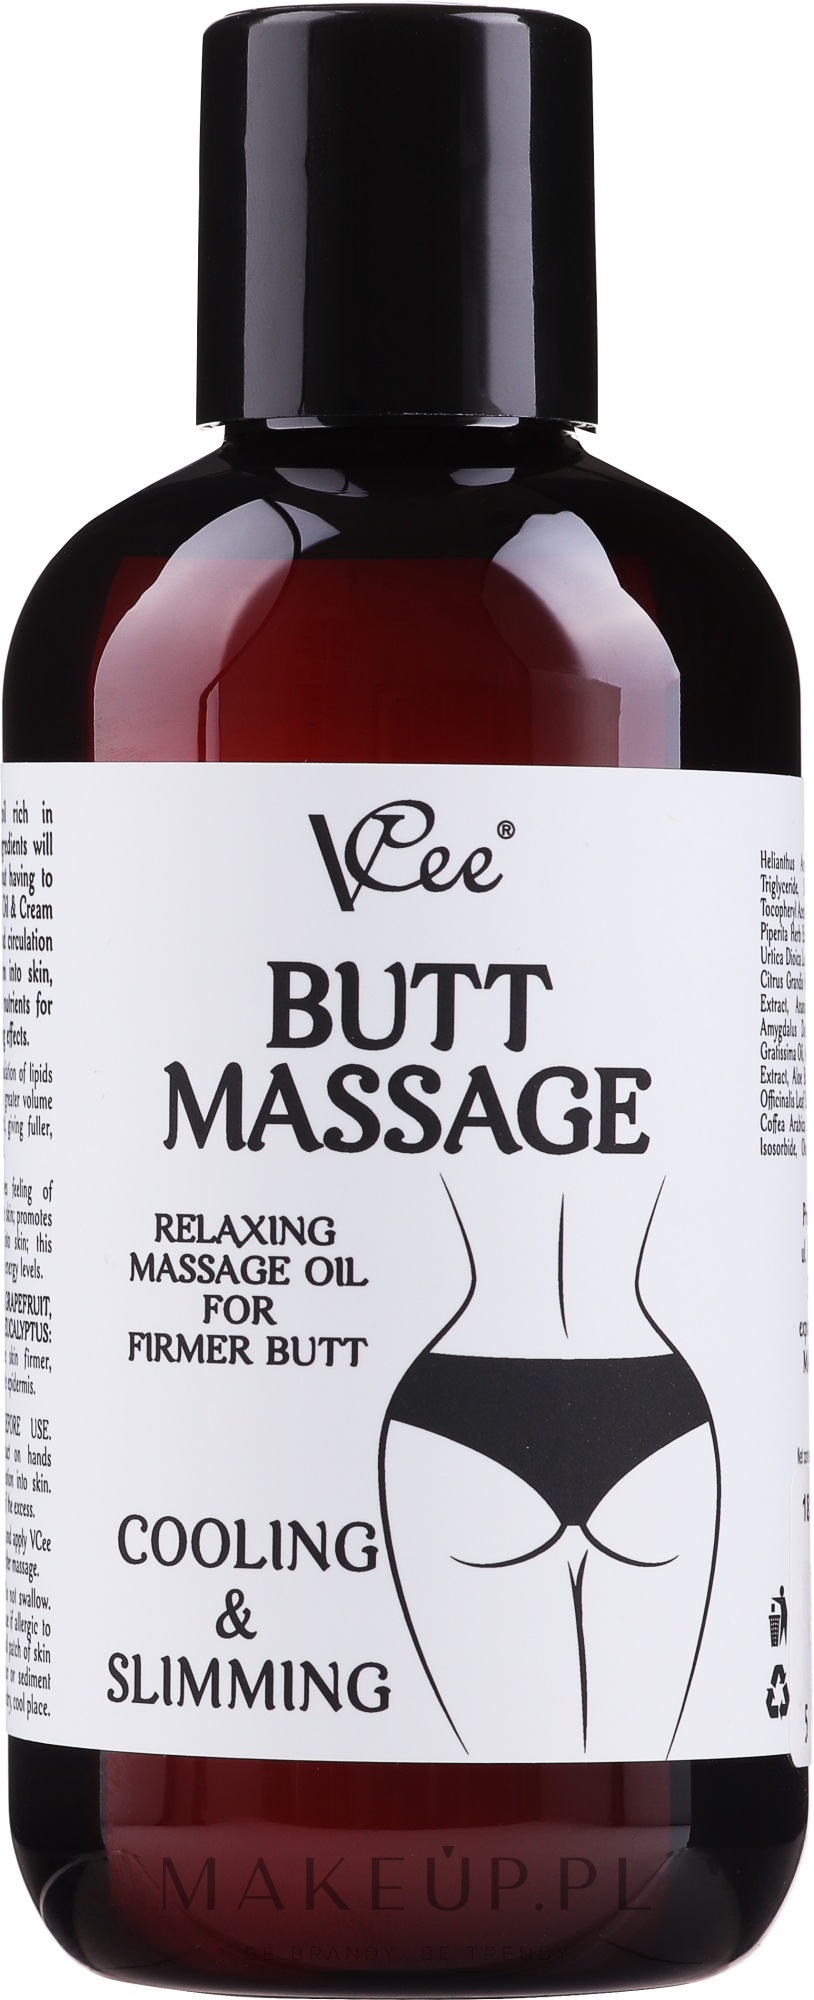 Relaksujący olejek do masażu pośladków - VCee Butt Massage Relaxing Massage Oil For Firmer Butt — Zdjęcie 200 ml